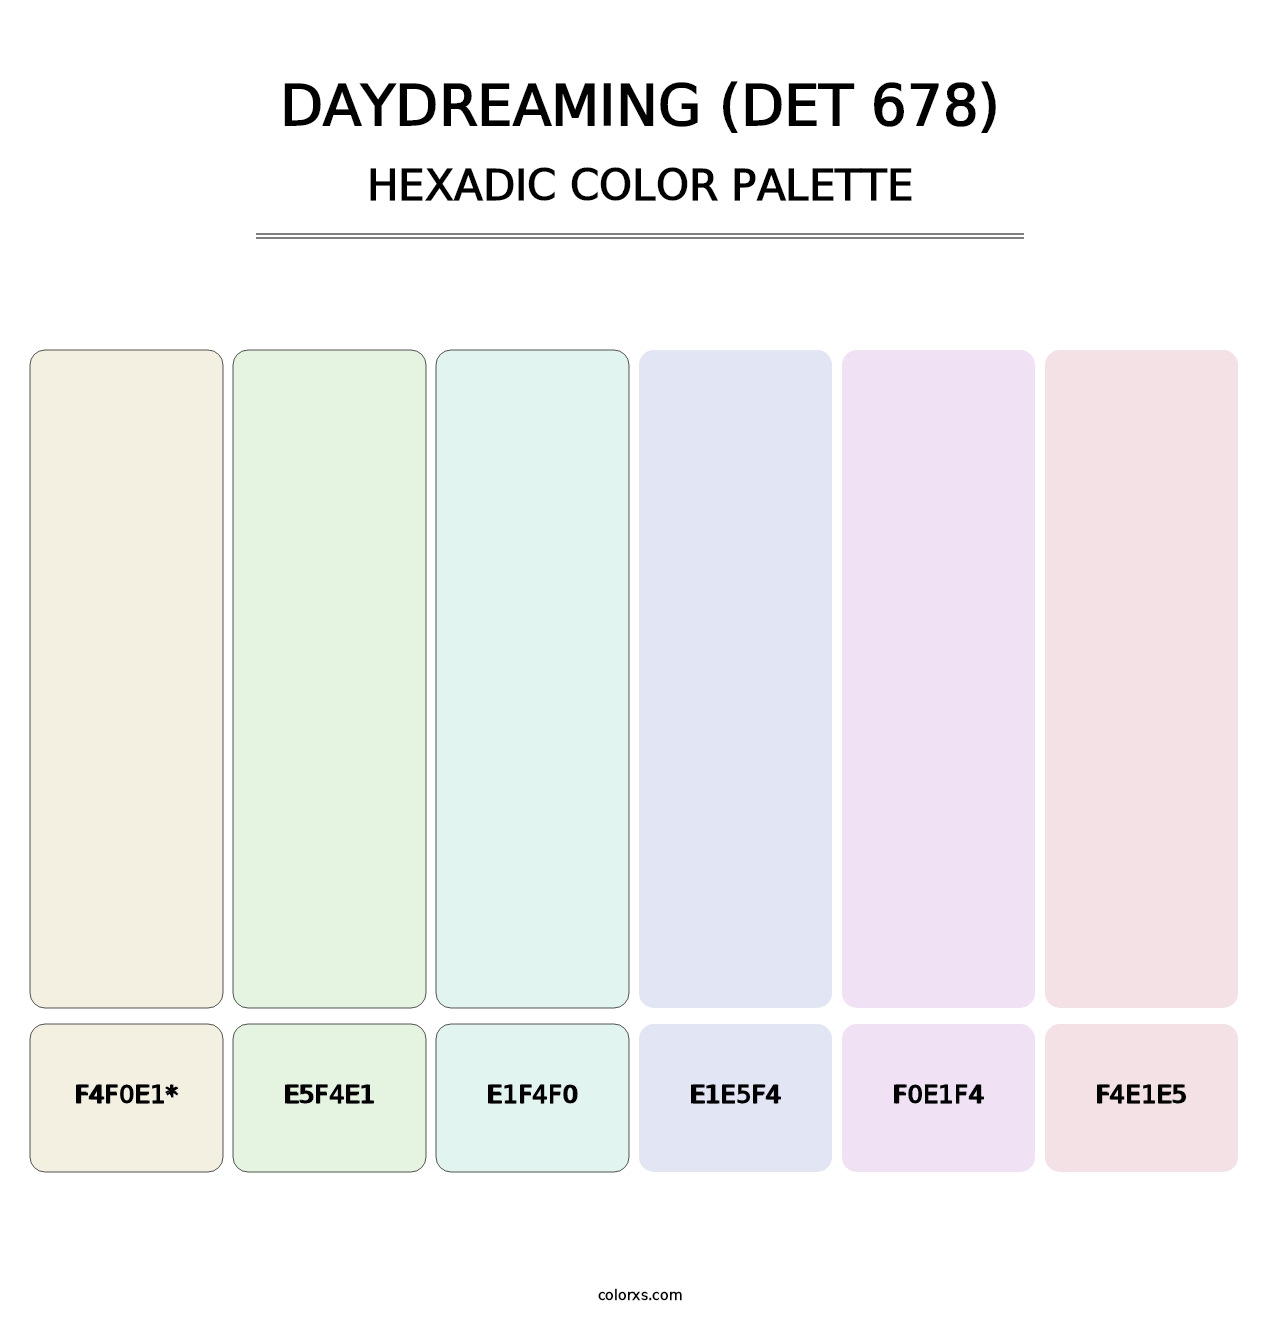 Daydreaming (DET 678) - Hexadic Color Palette